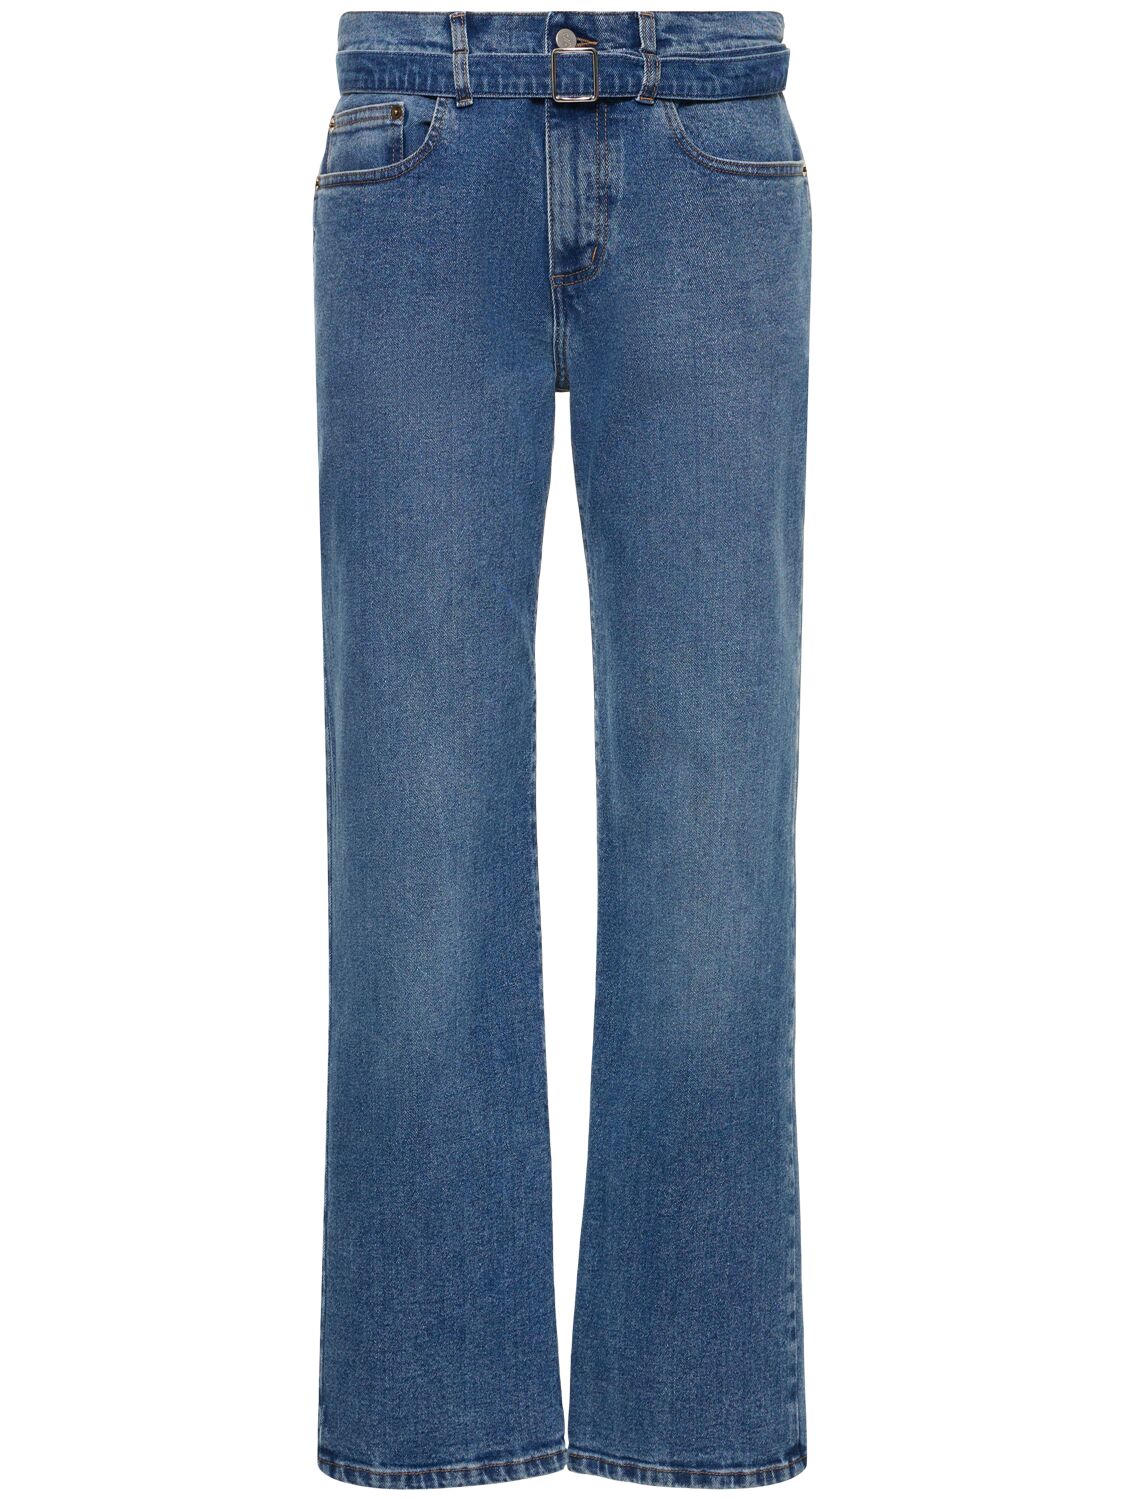 Ellsworth Straight Jeans